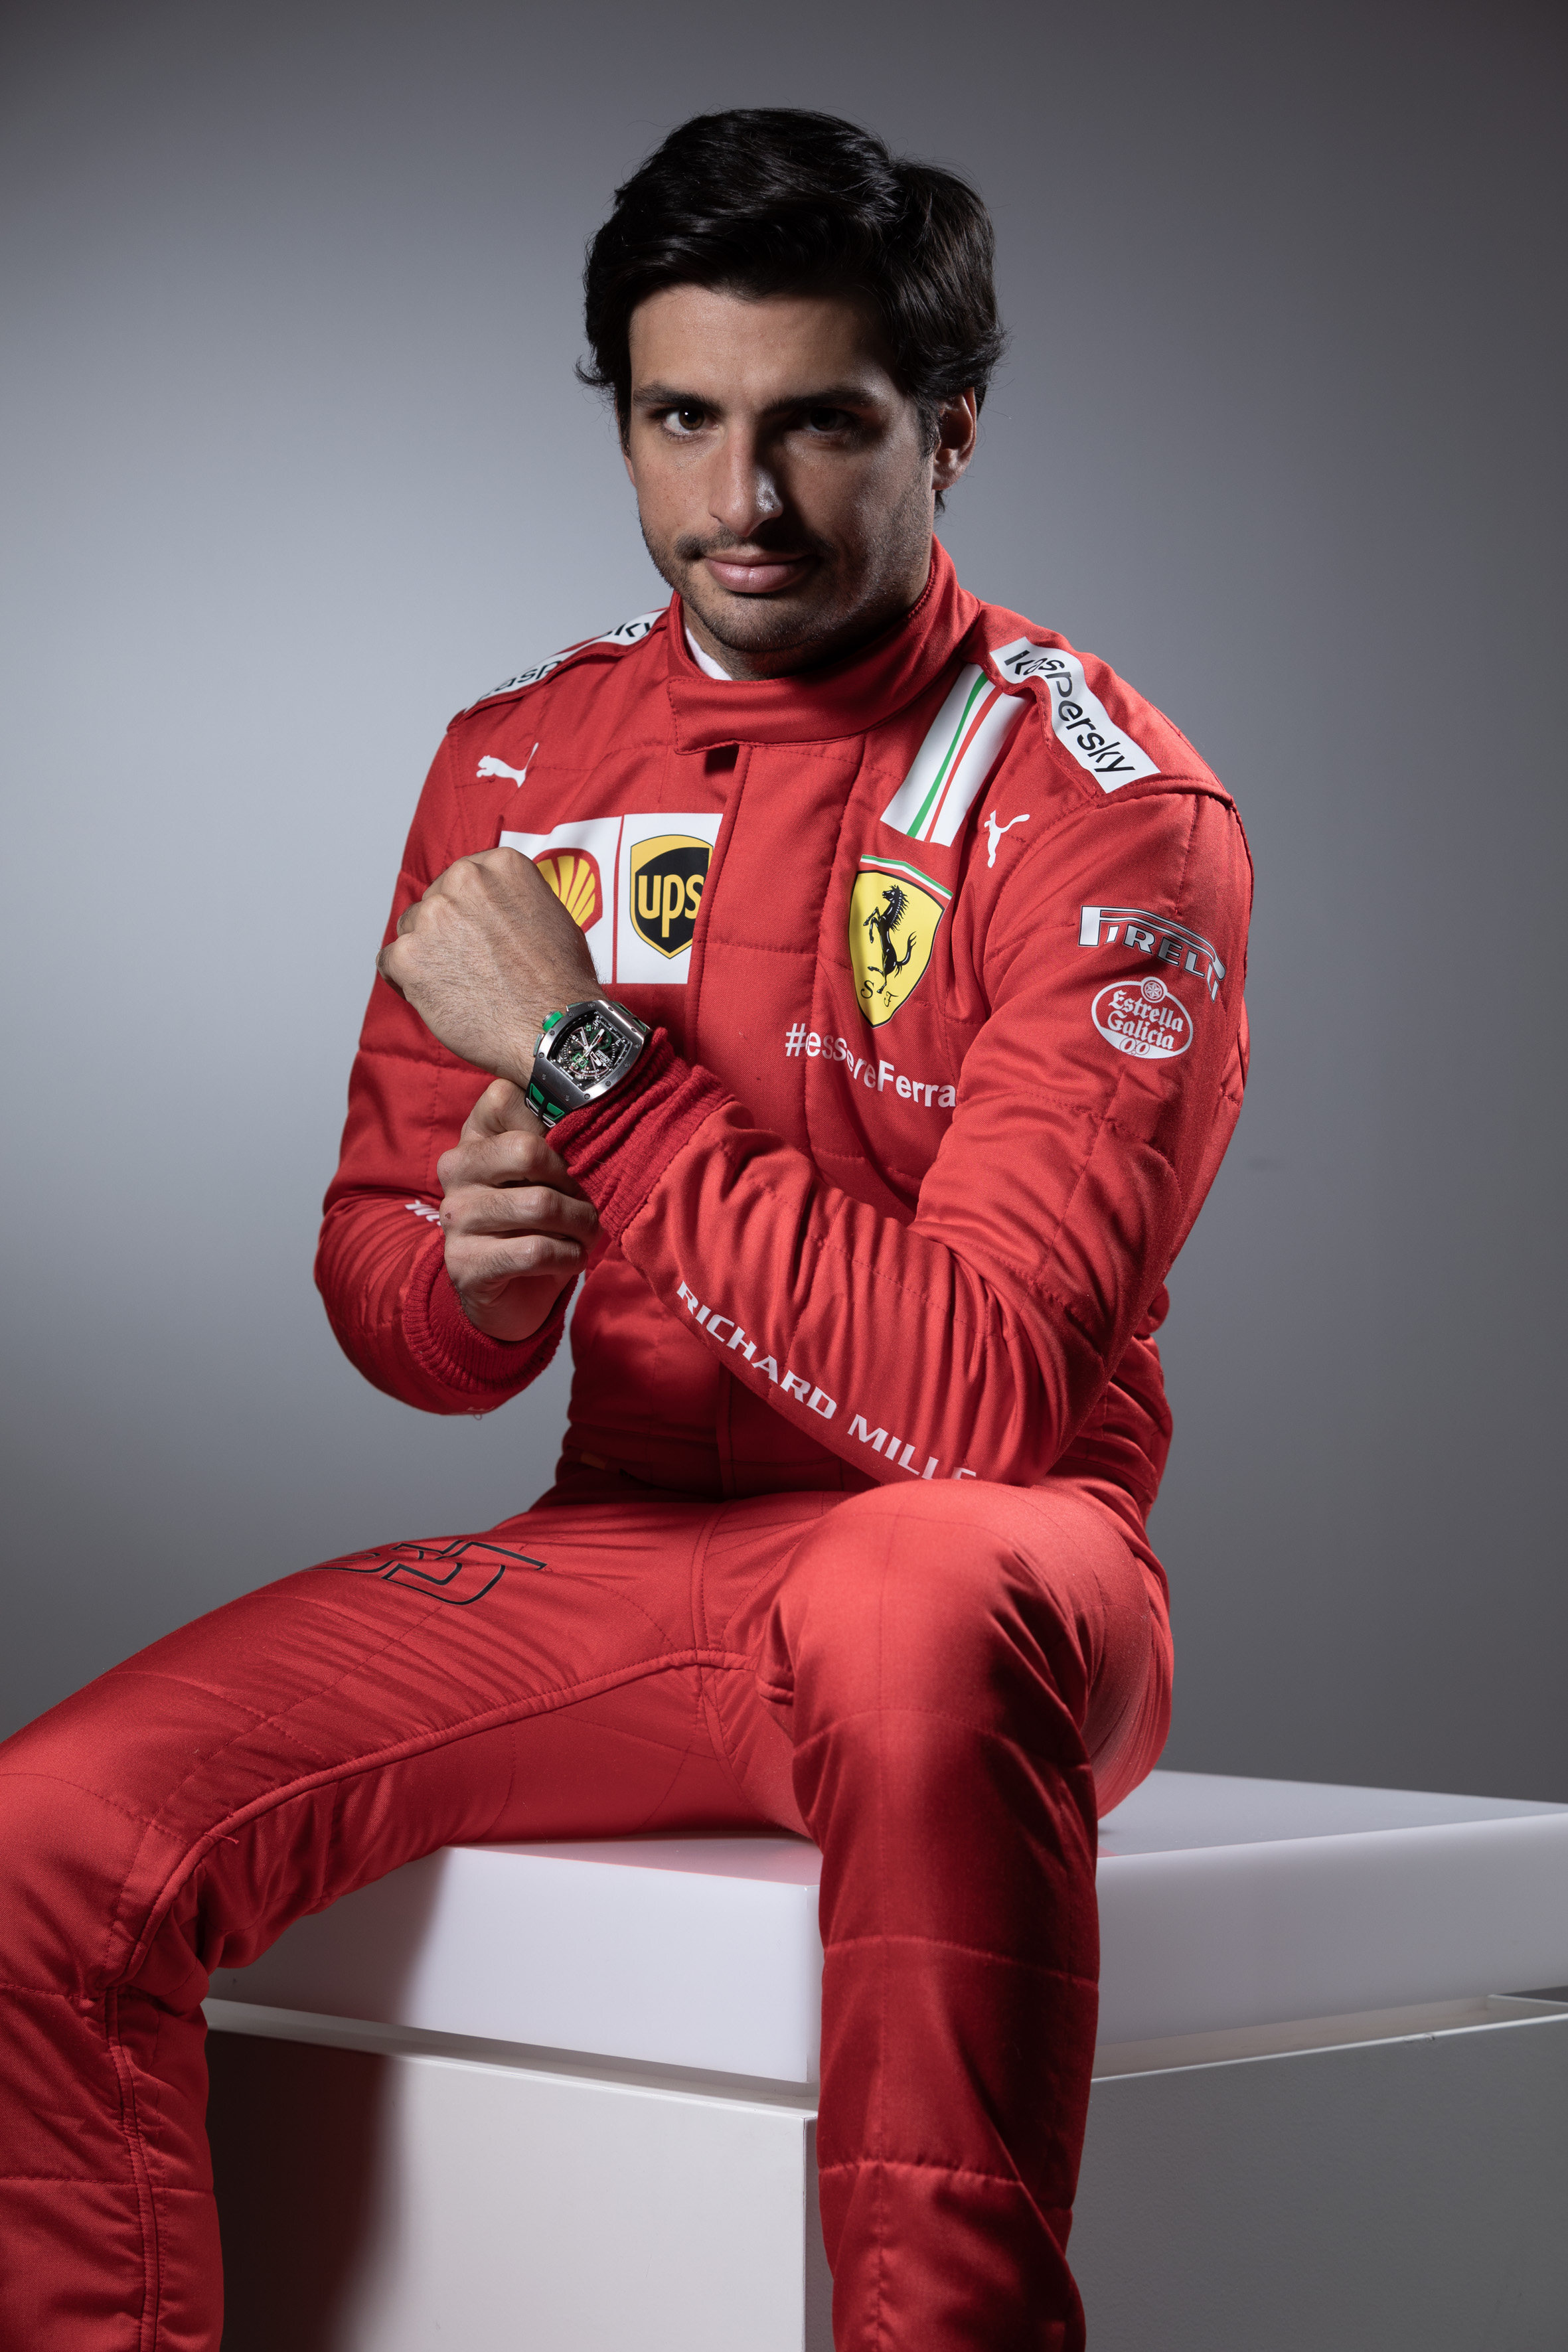 Racing driver Carlos Sainz sports a Richard Mille watch. Photo: Scuderia Ferrari Press Office